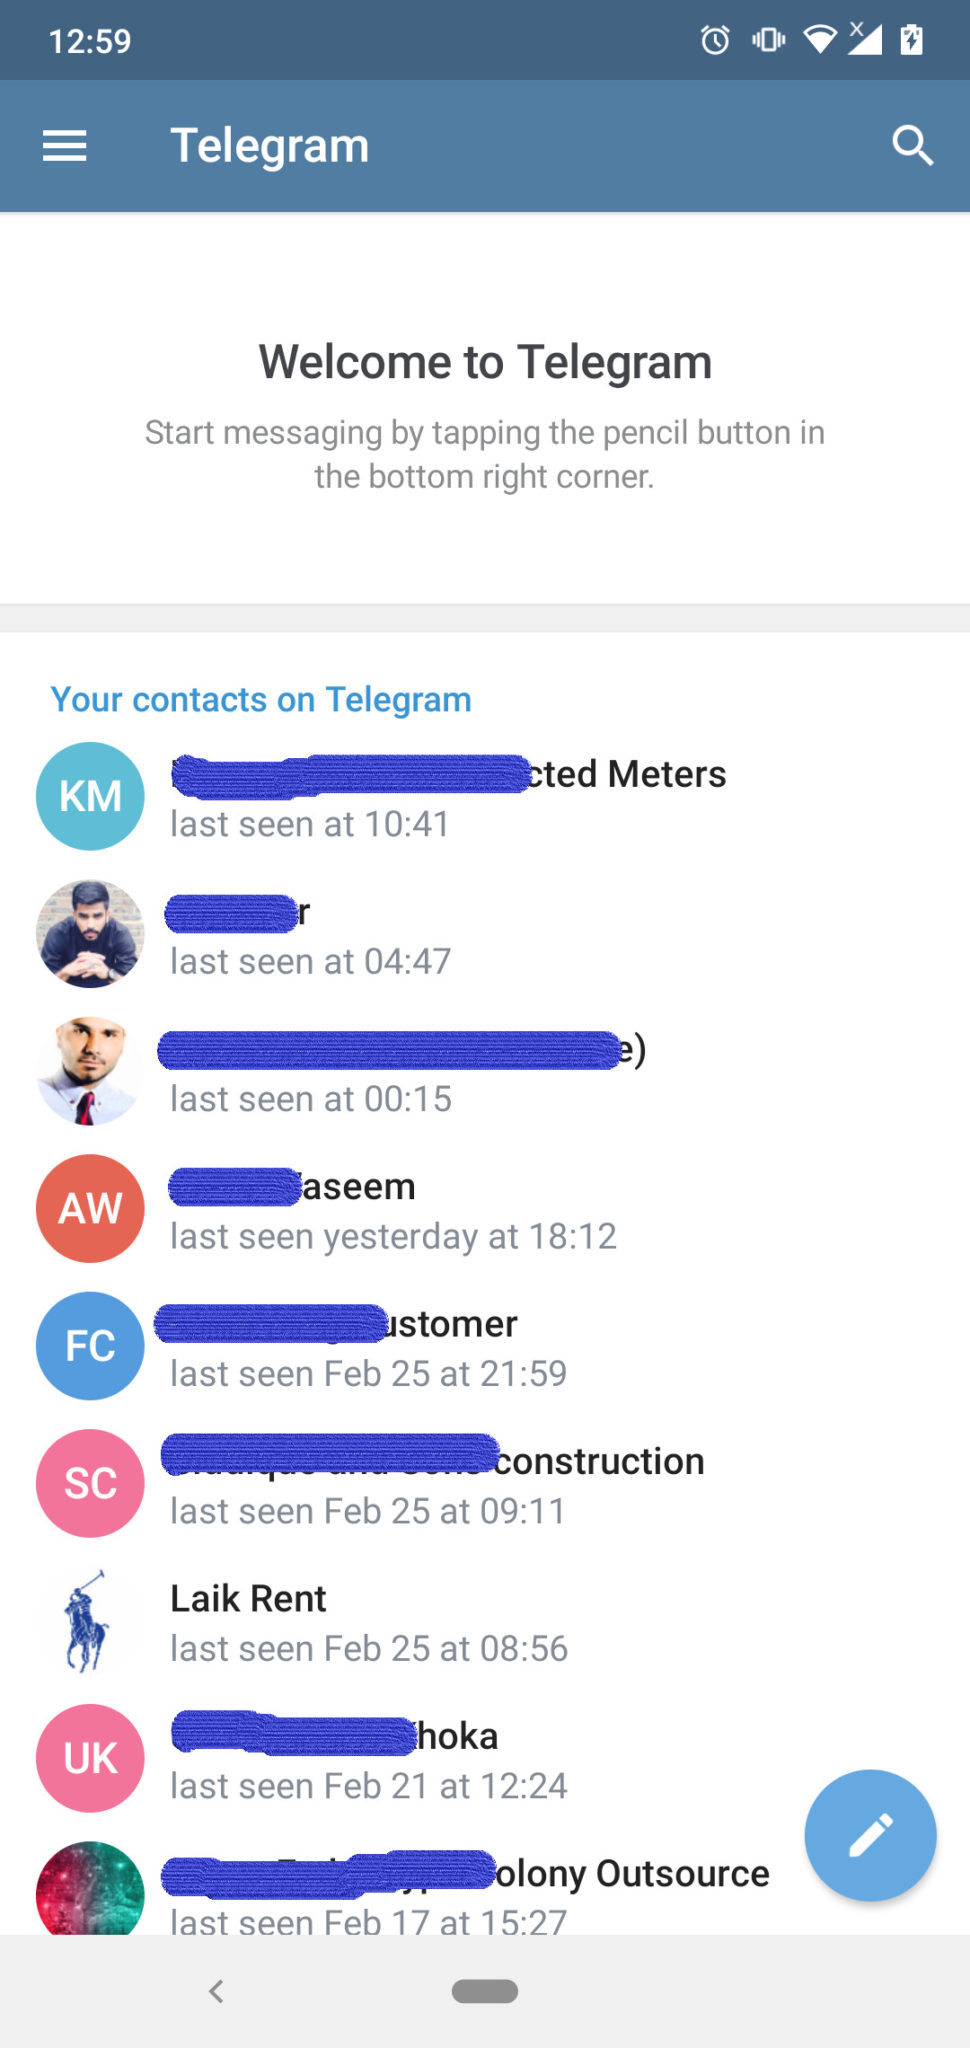 install telegram app for android